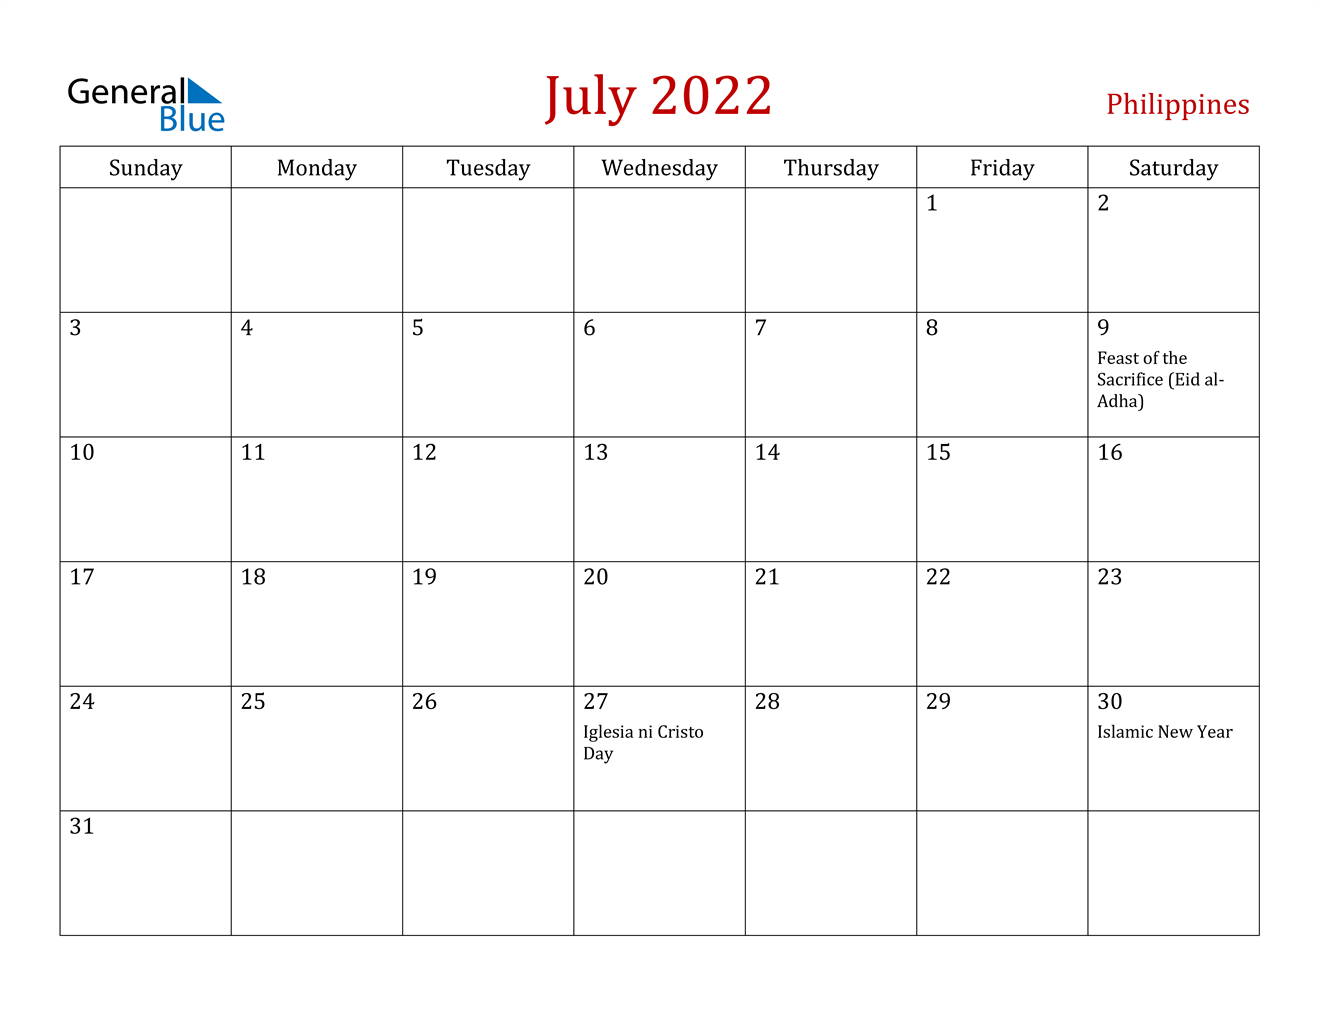 July 2022 Calendar - Philippines